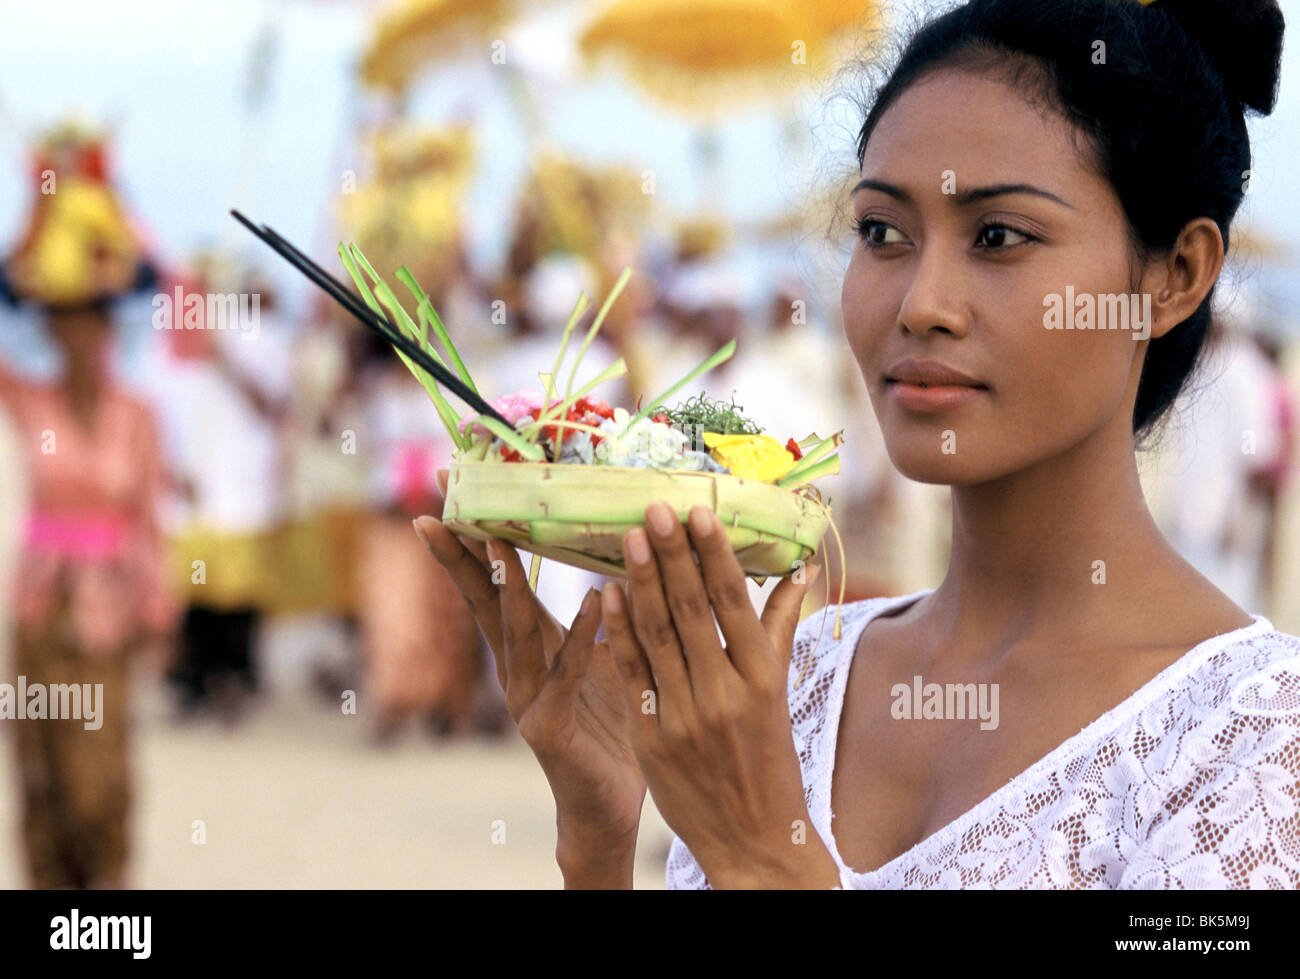 Chica con ofrendas en una ceremonia reliqious en Bali, Indonesia, Sudeste Asiático, Asia Foto de stock